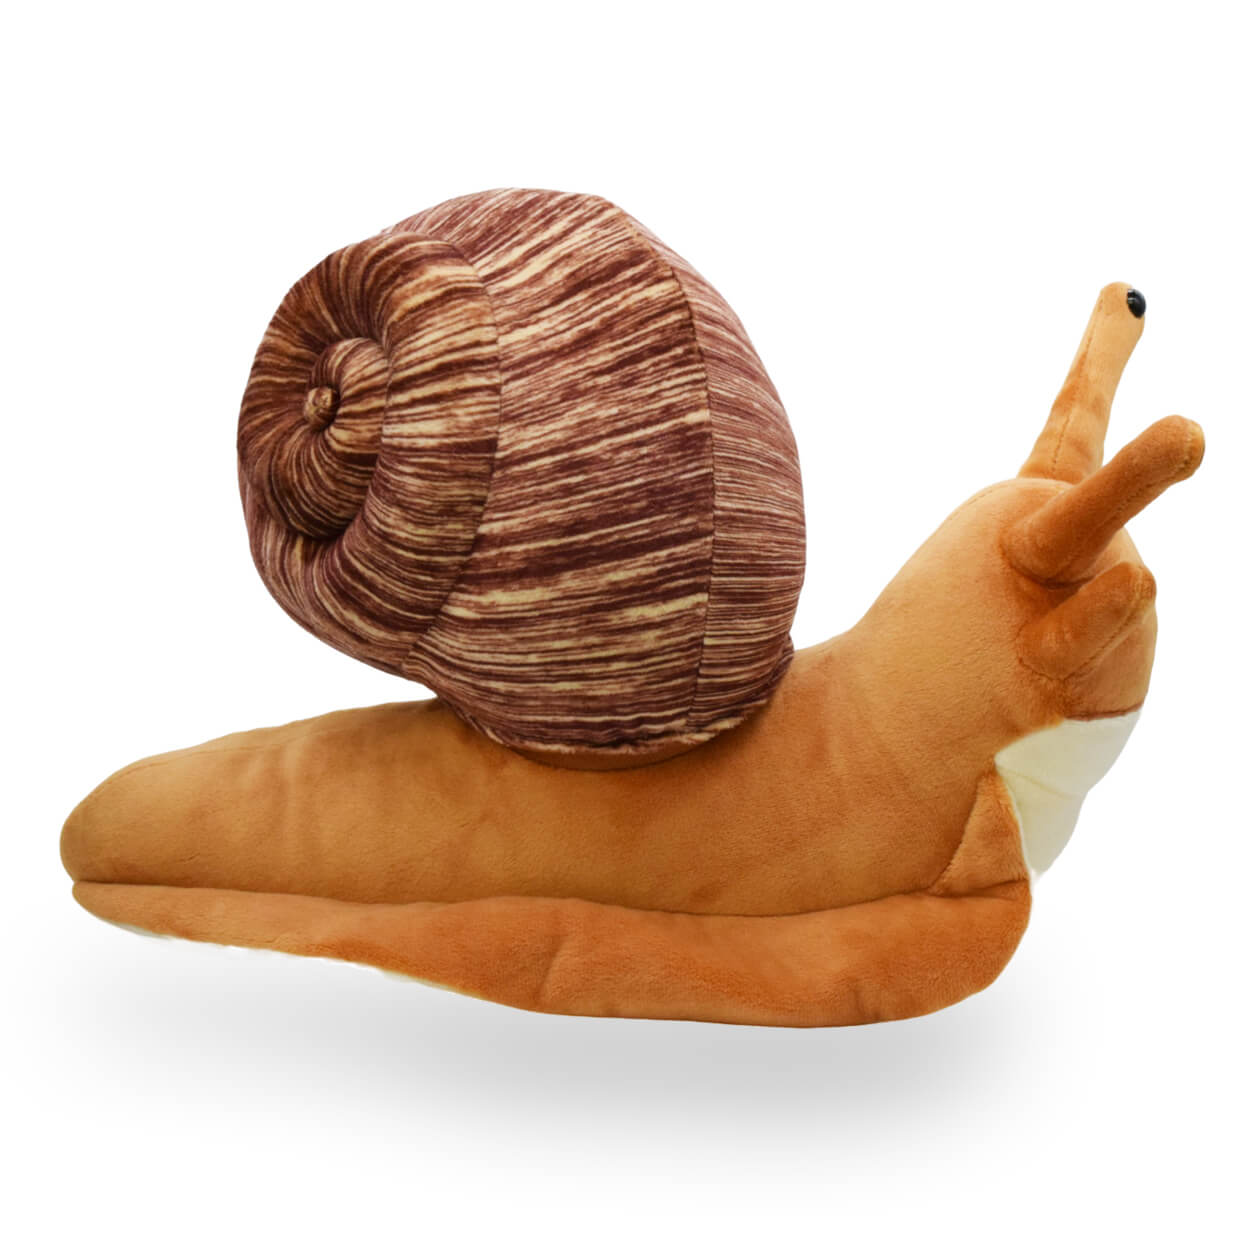 Realistic Snails Mantis Stuffed Animal Plush Toy